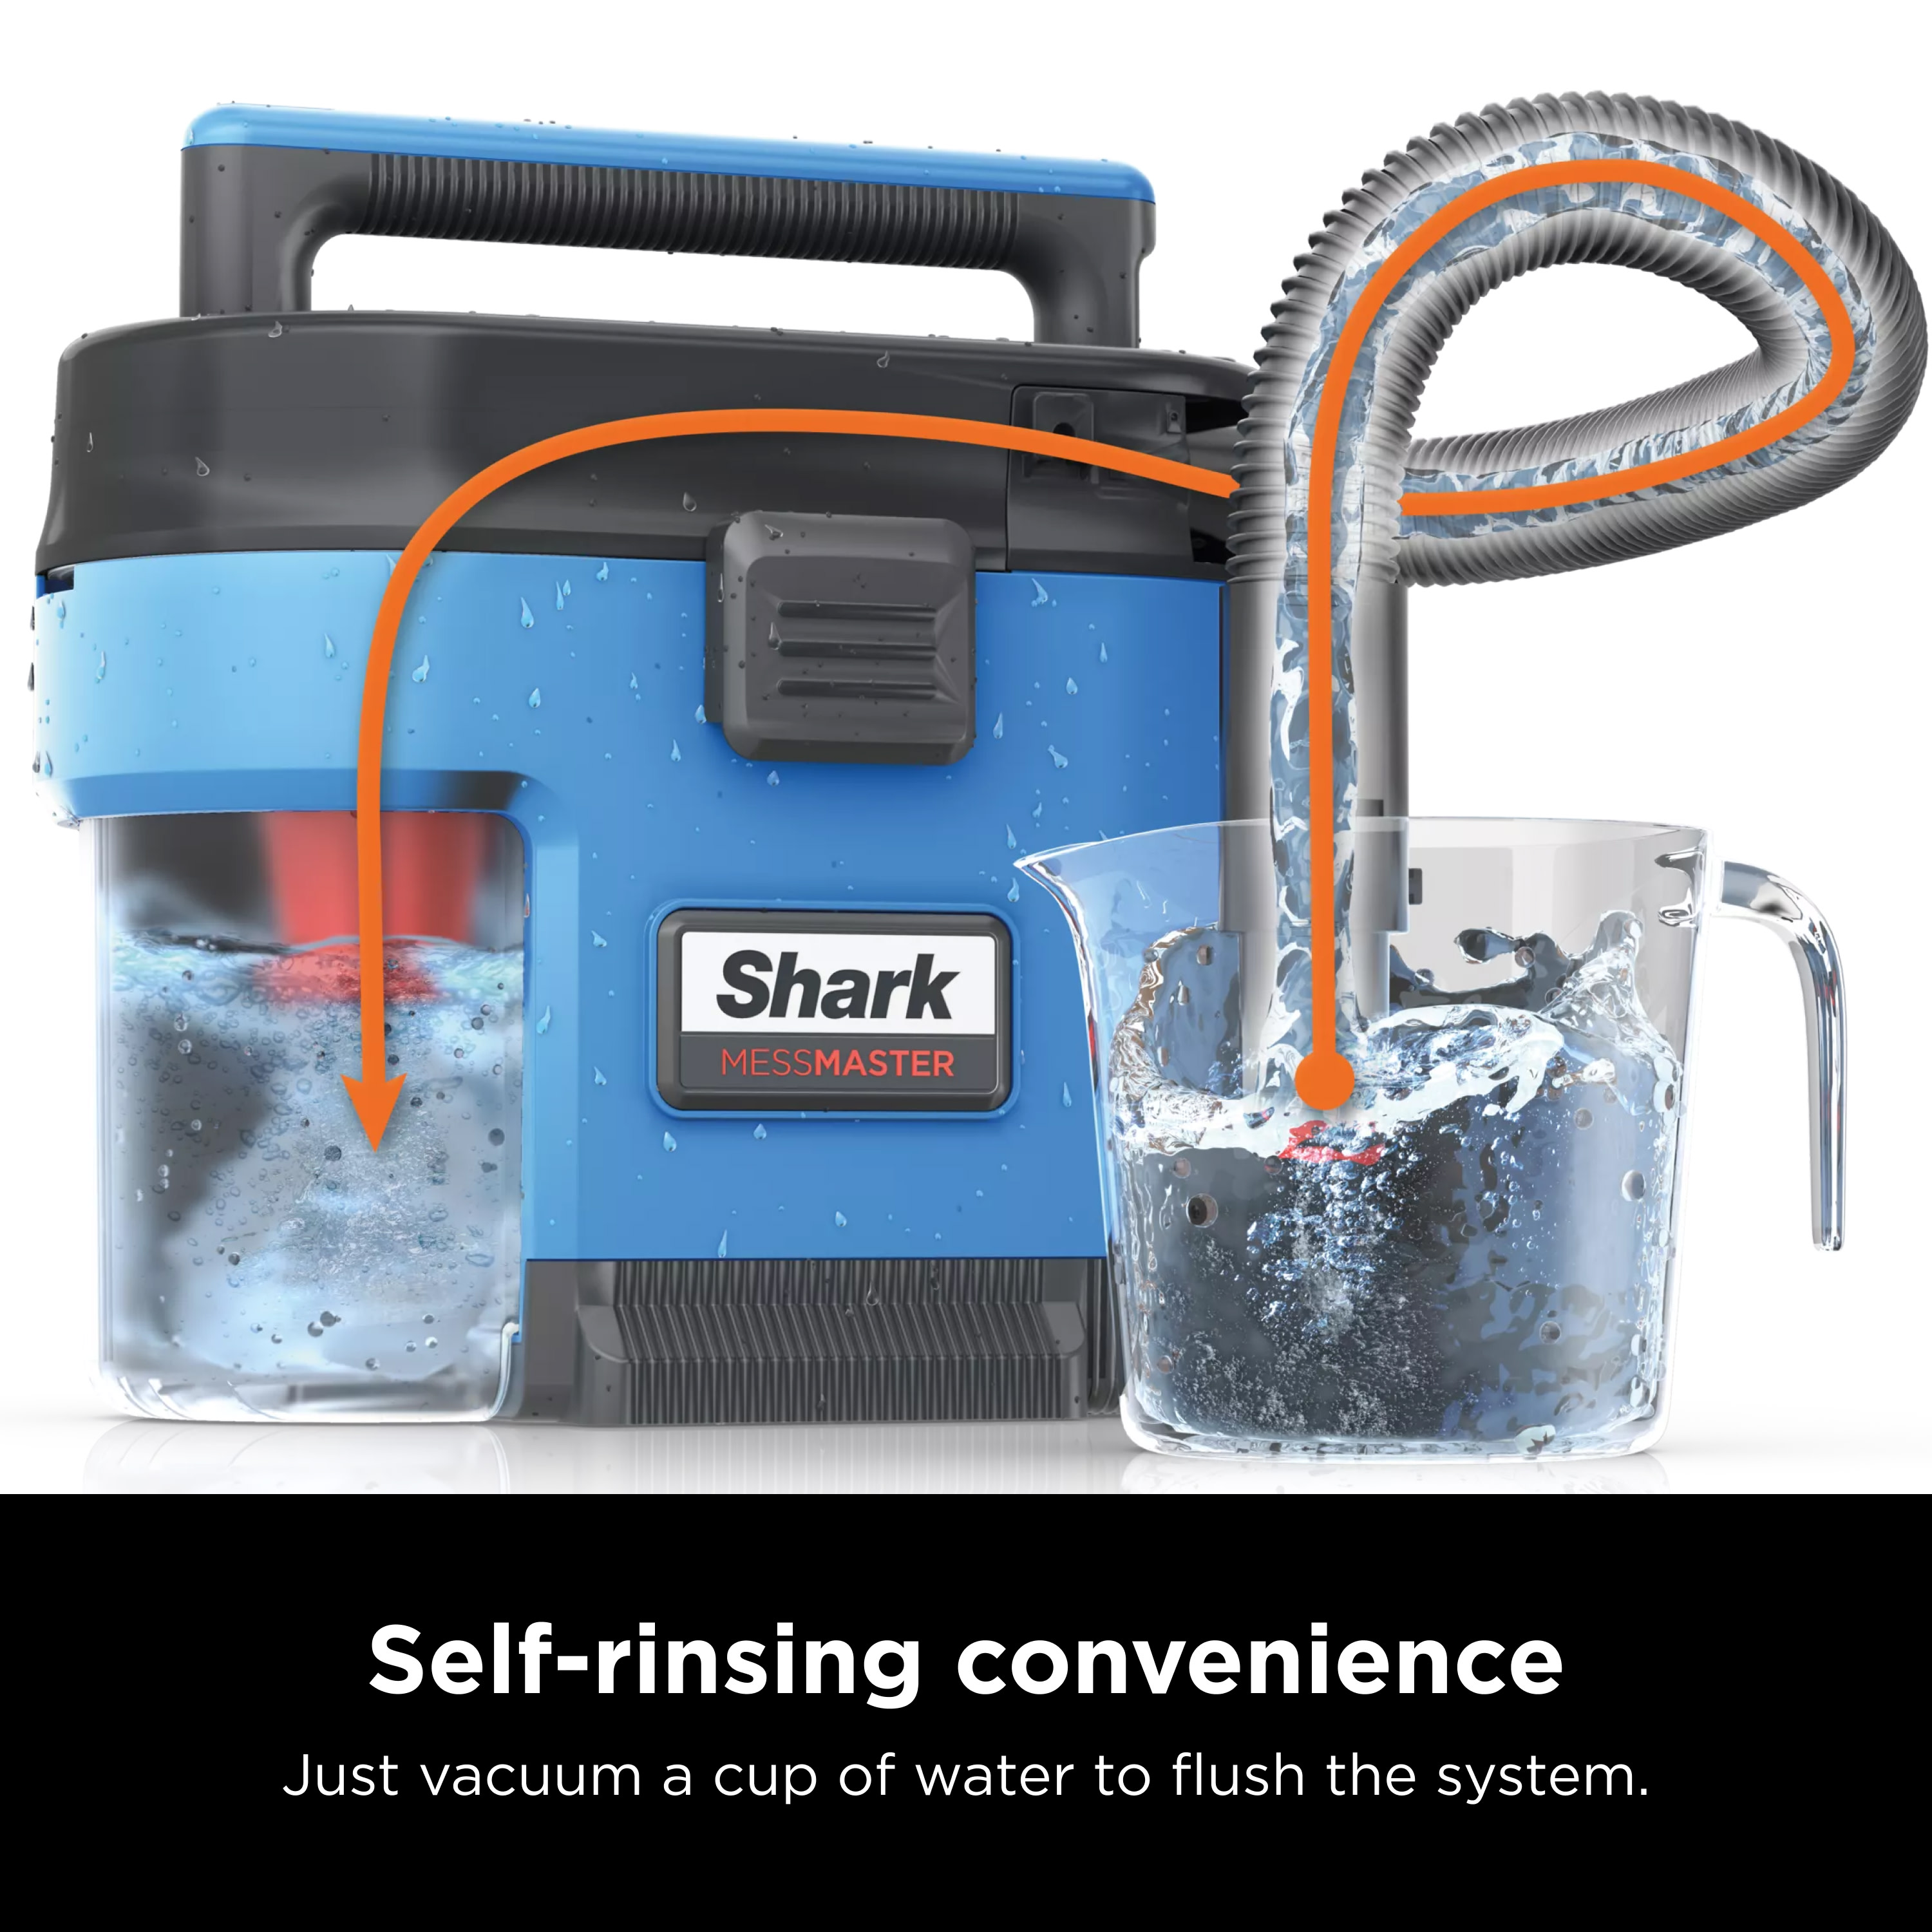 Shark MessMaster Portable Wet Dry Vacuum, Small Shop Vac, 1 Gallon Capacity, Corded, Handheld, VS100 - image 3 of 12